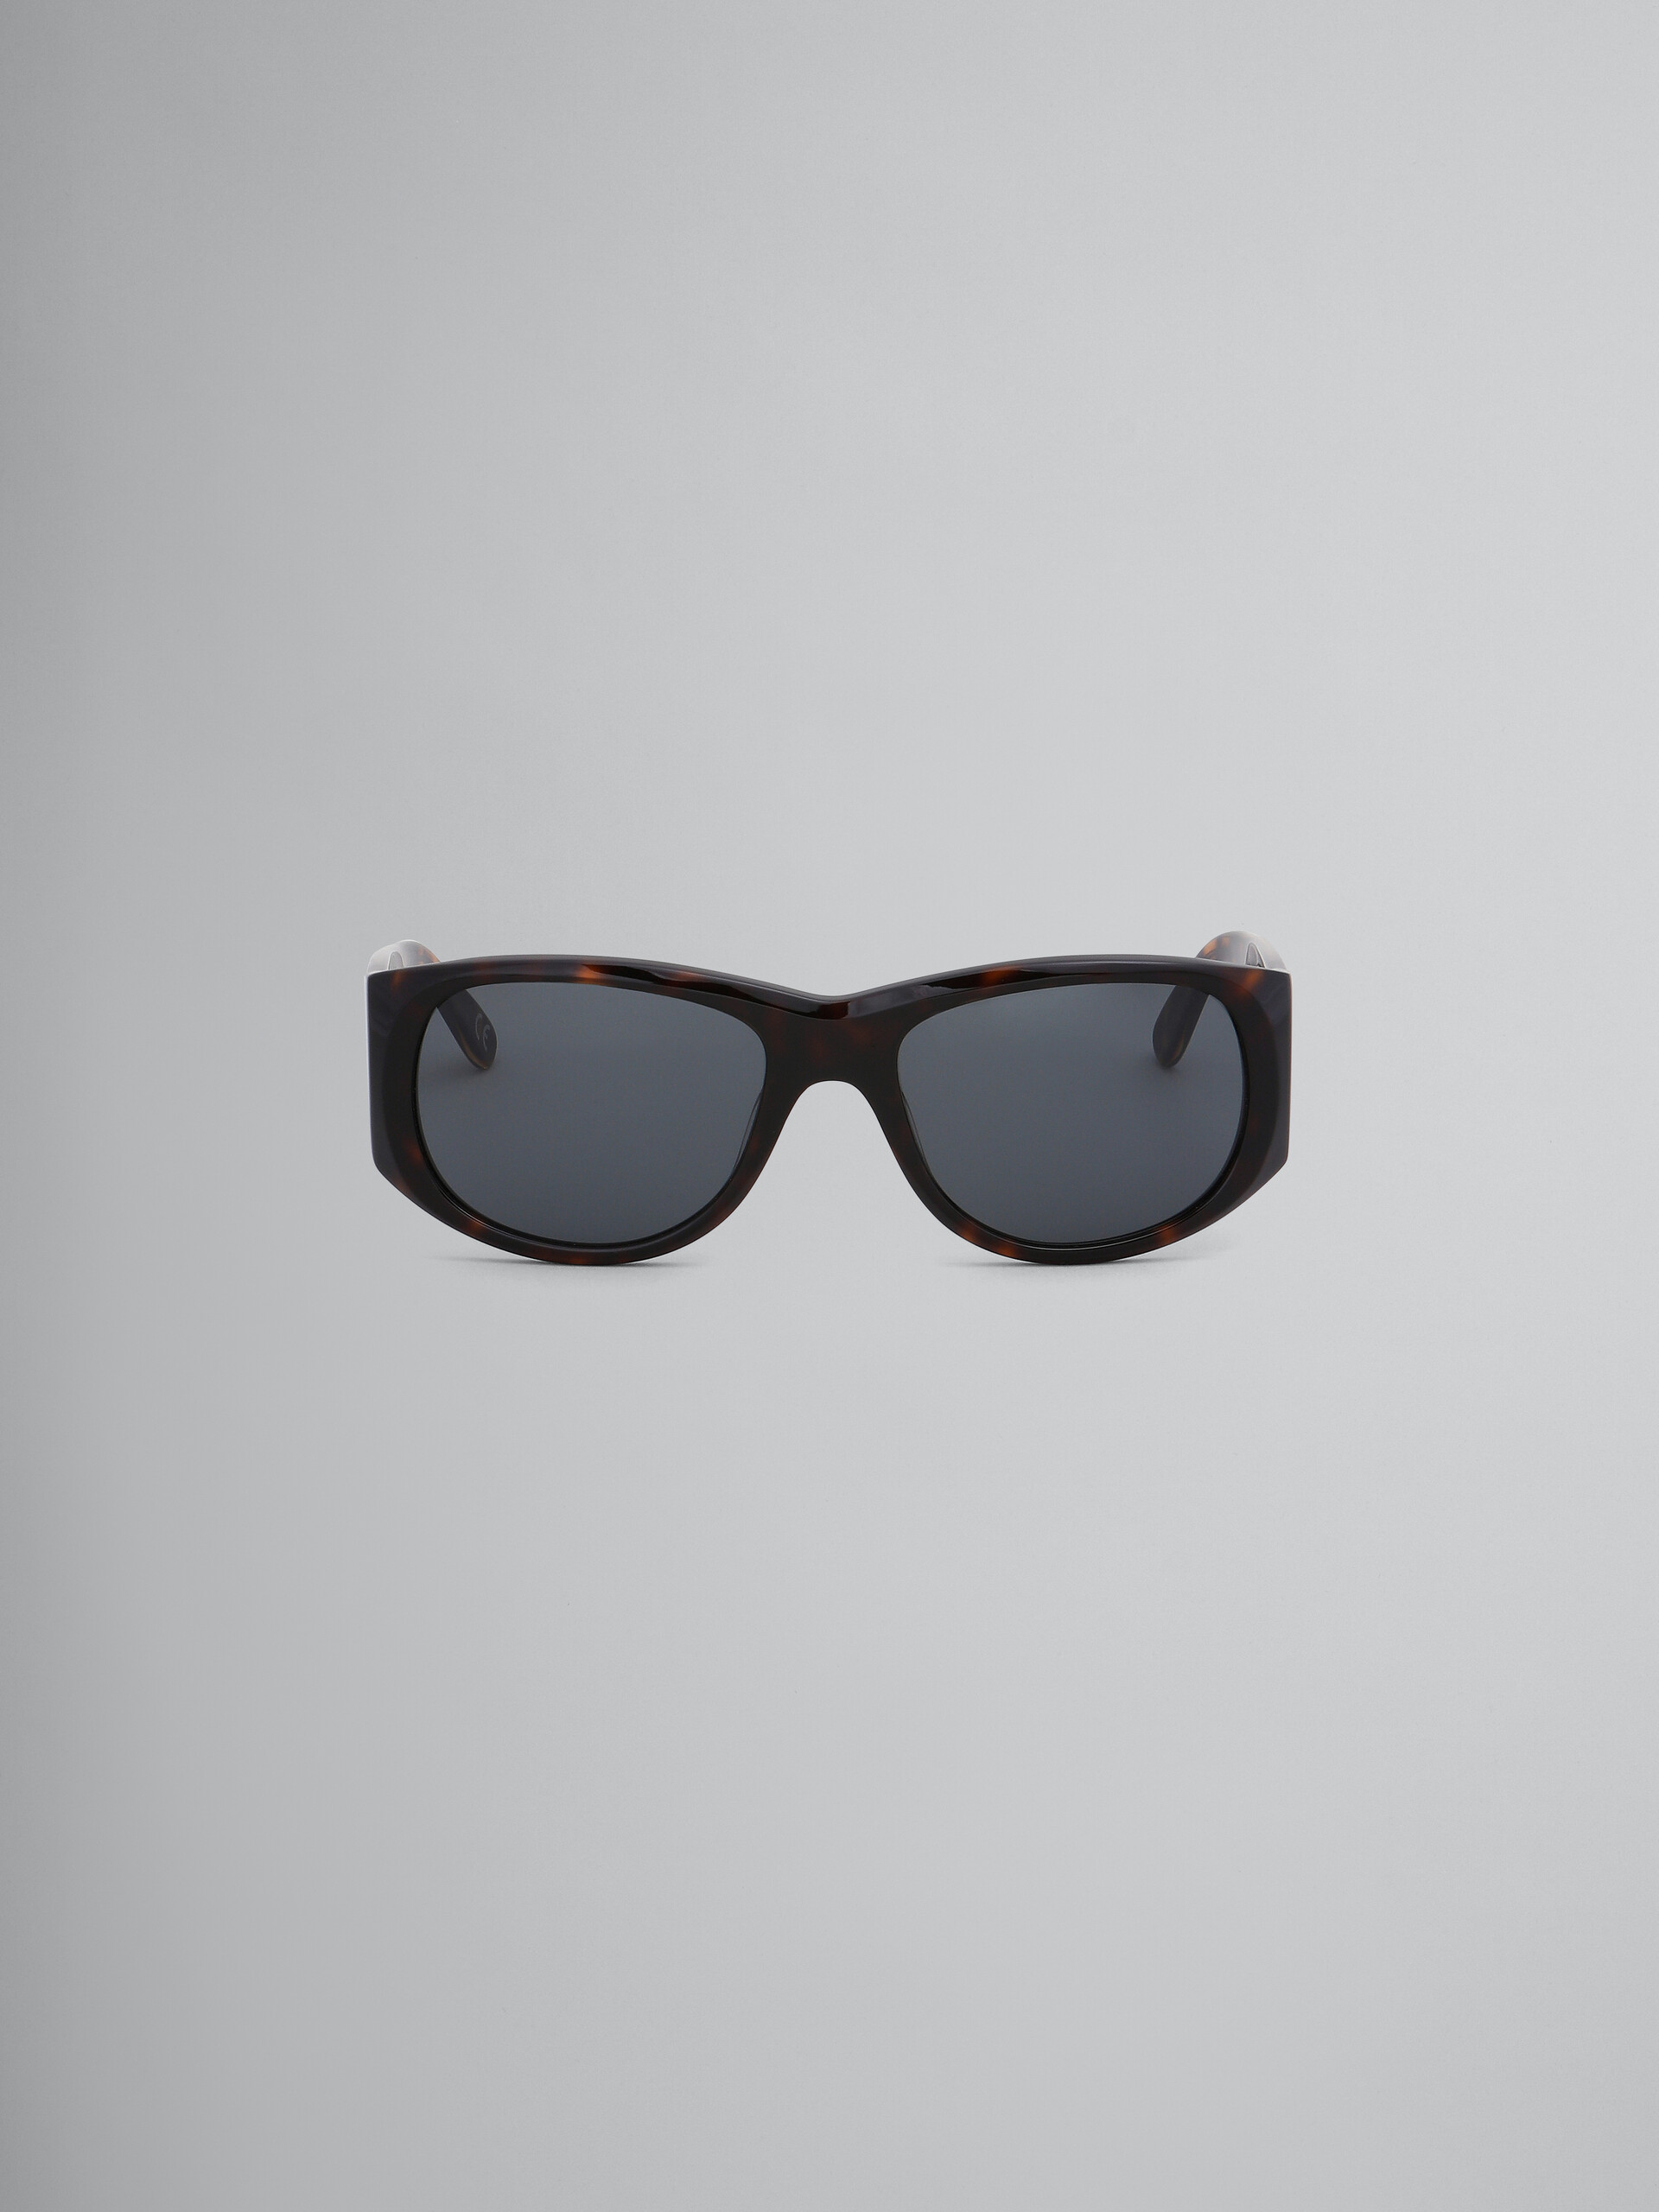 Black Orinoco River acetate sunglasses - Optical - Image 1